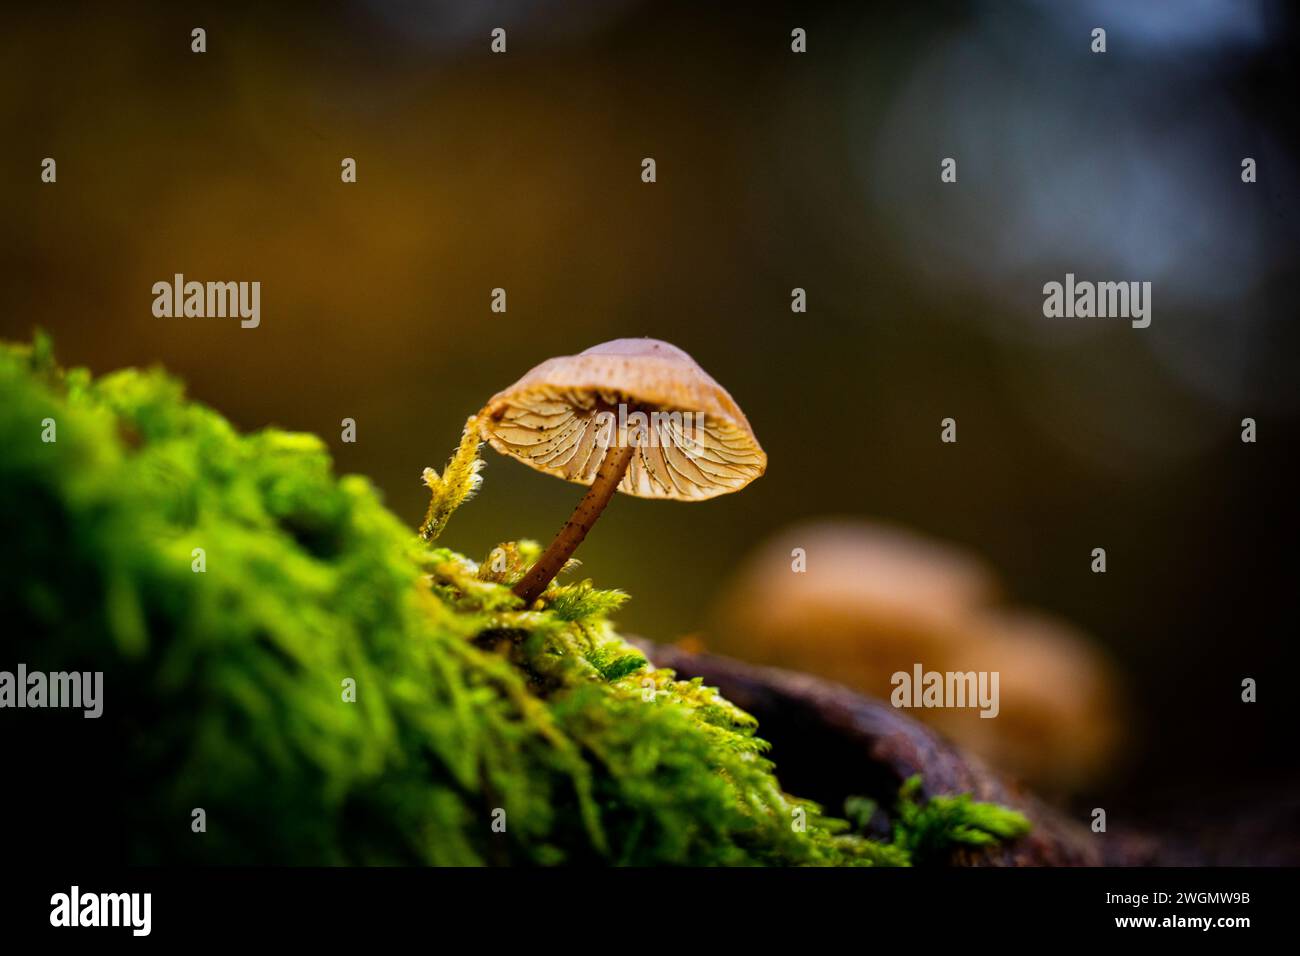 A closeup of a tiny mushroom on a mossy log Stock Photo